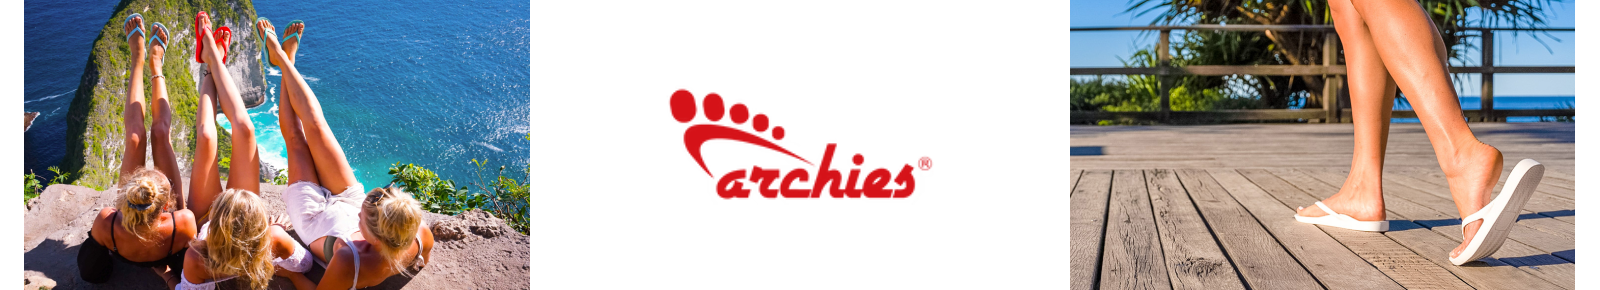 Archies, Shoes